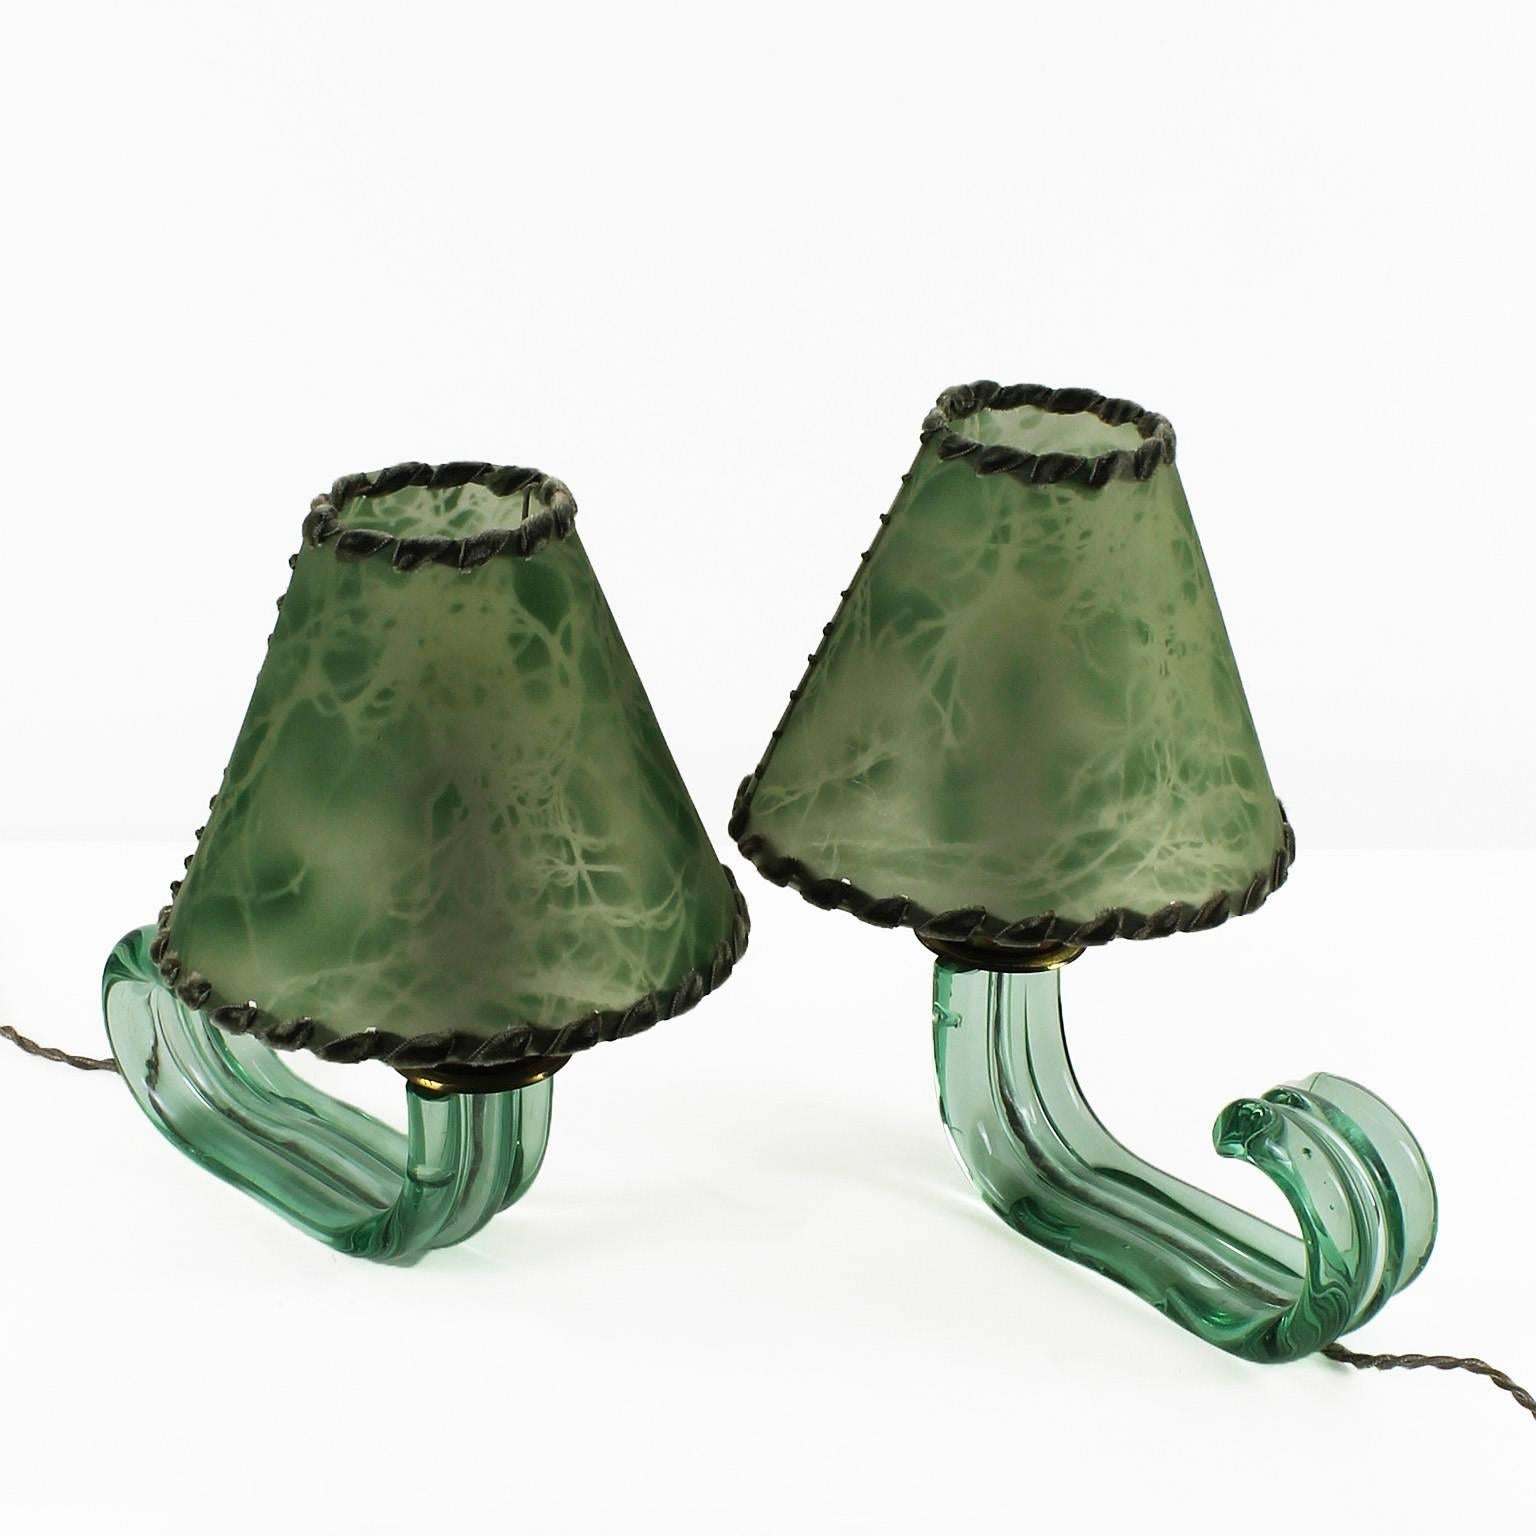 Pair of mini lamps, green Murano glass, brass hardware, original celluloid lampshades.
Brand: Seguso

Italy, Murano, circa 1940.